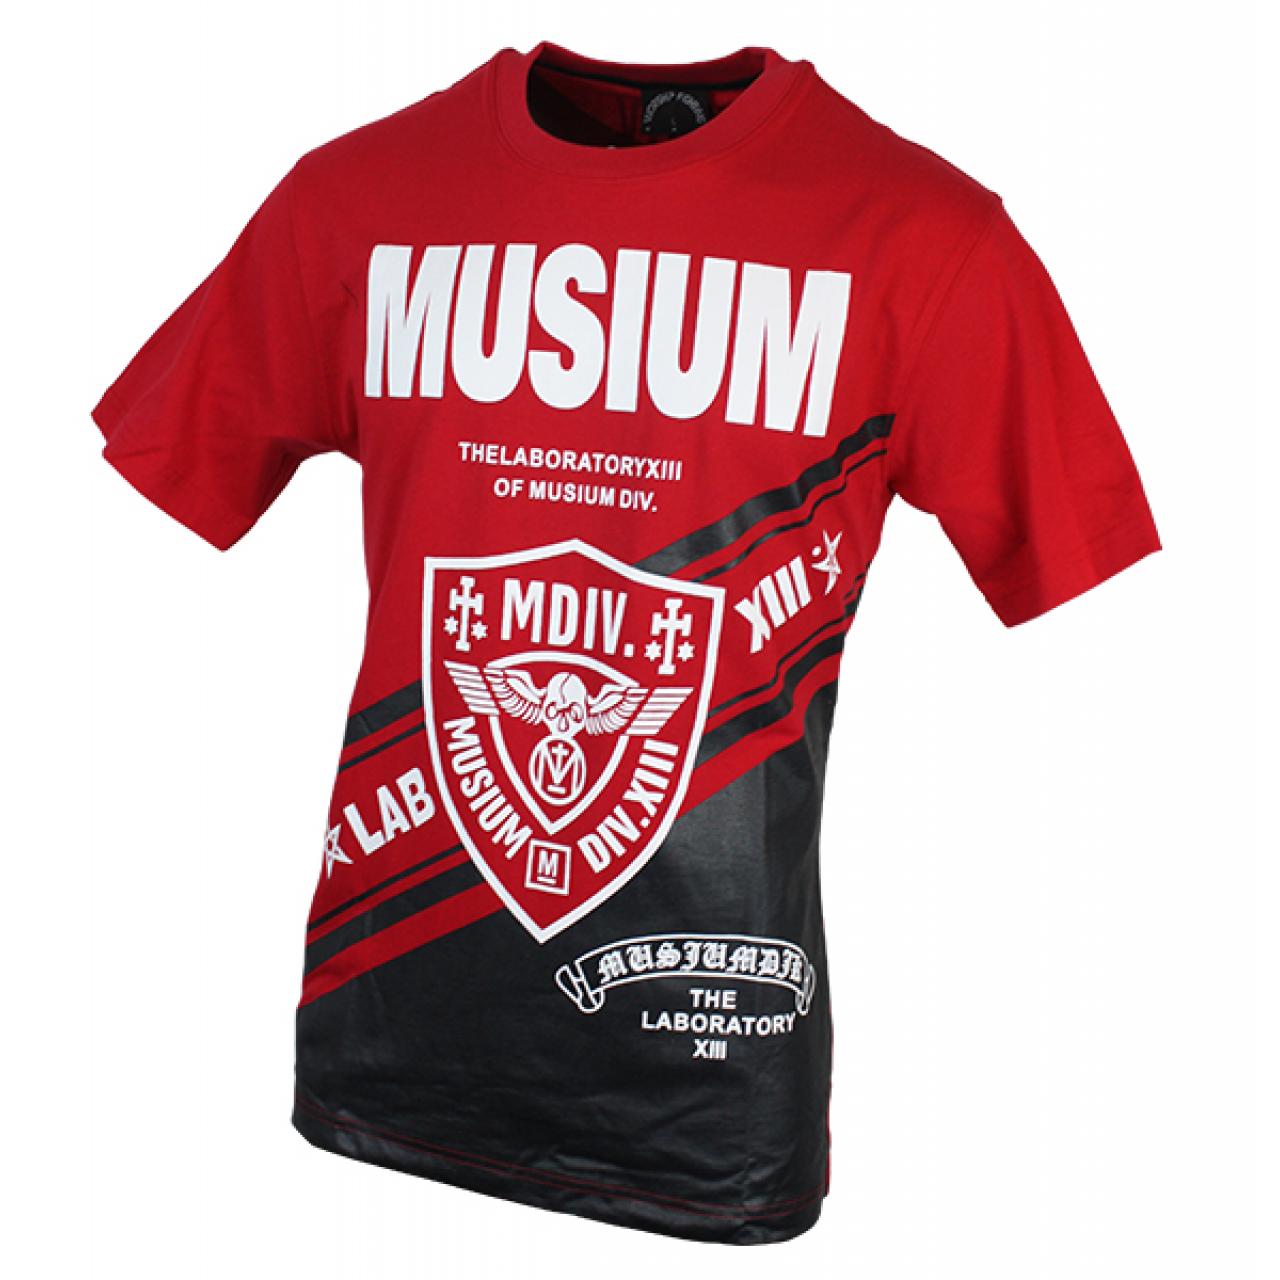 Stylish Red-Black Graphic Printed T-Shirt